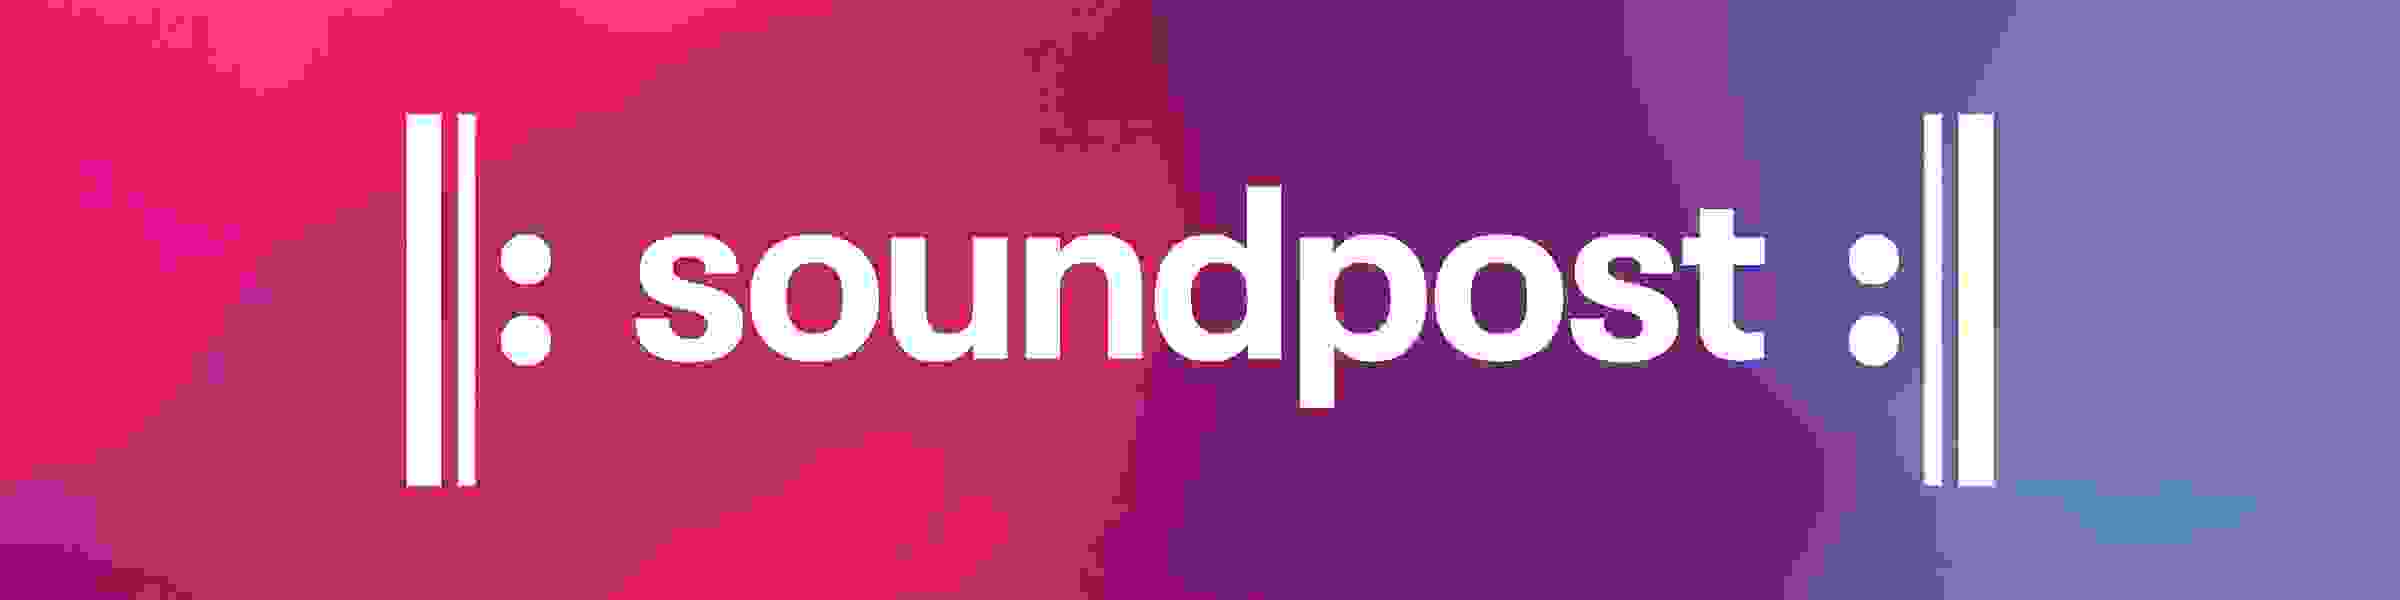 Soundpost banner